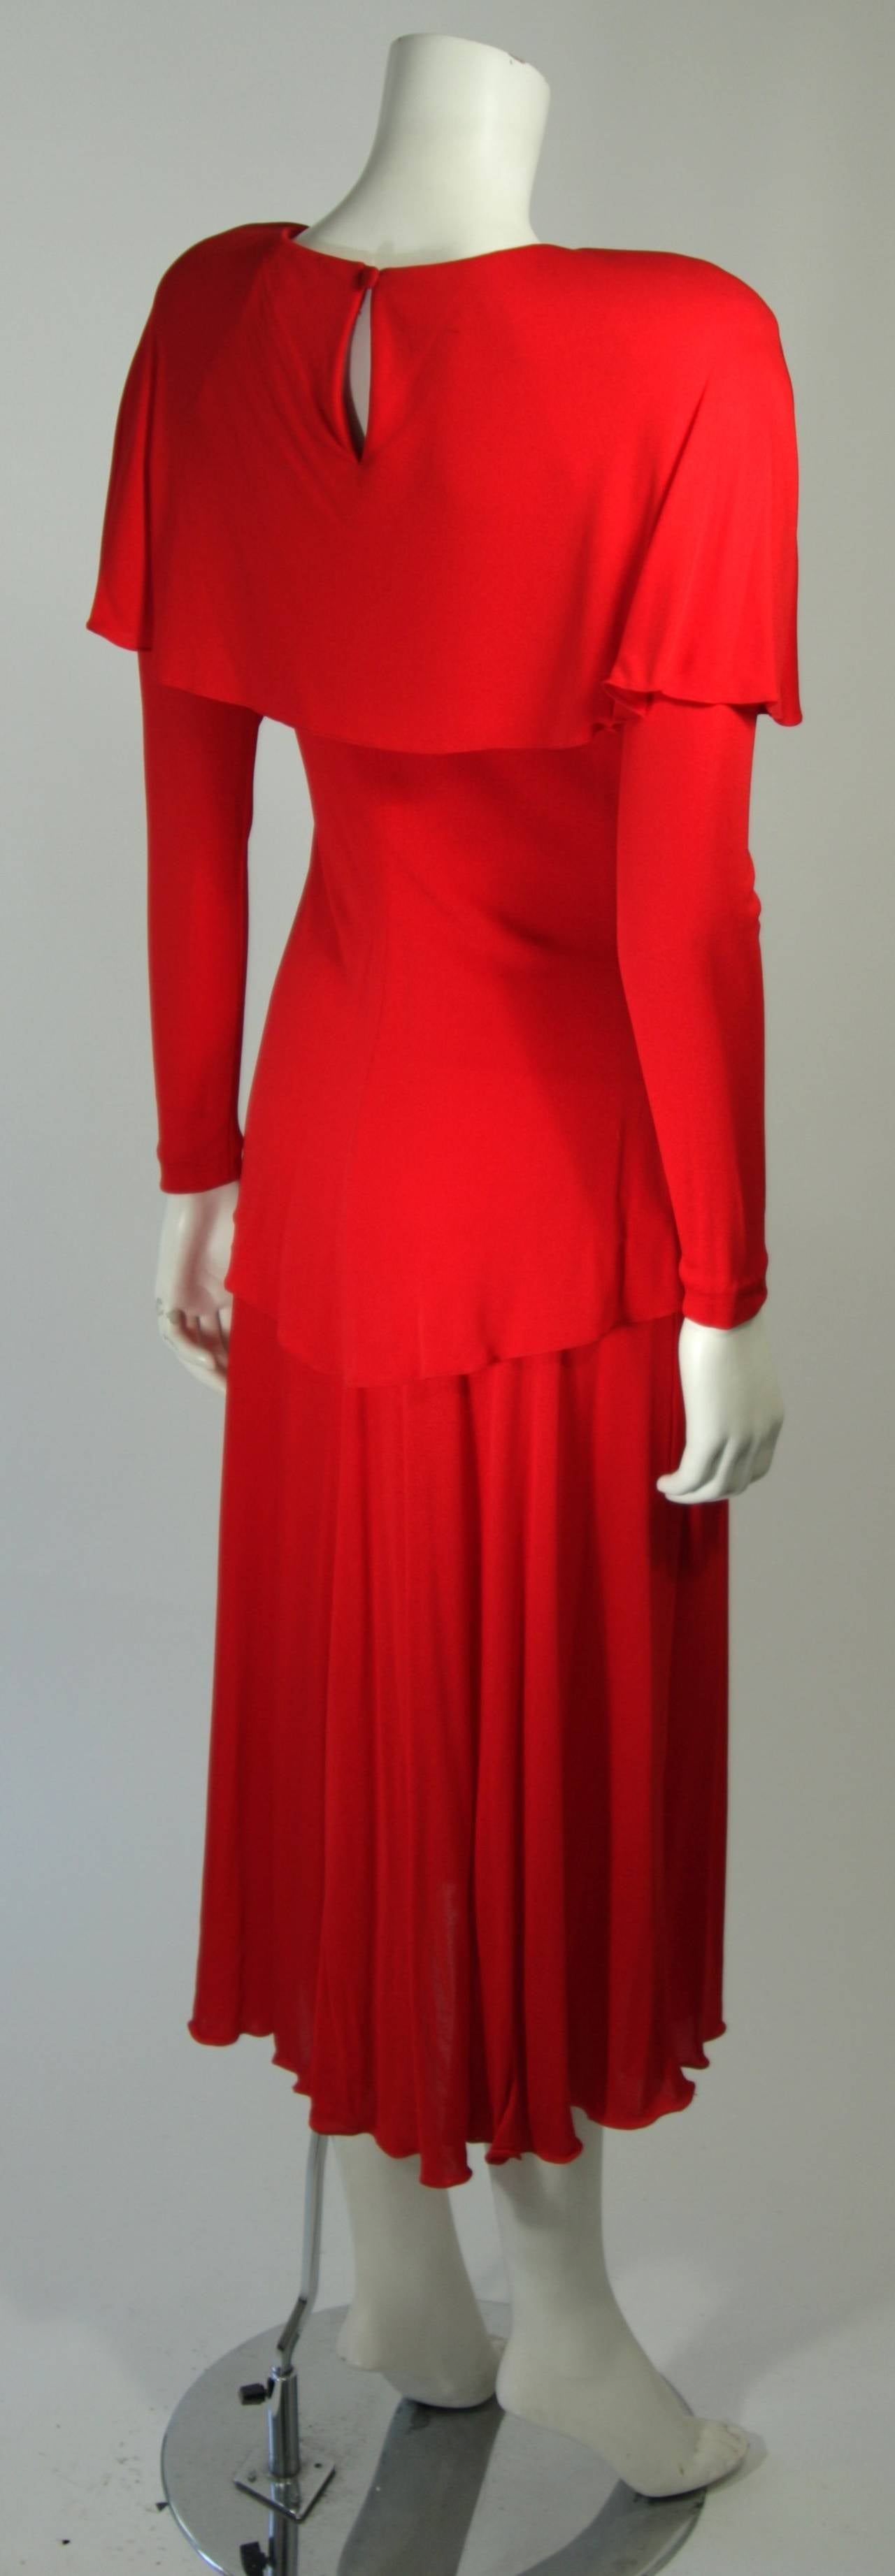 Holly Harp - Robe à manches longues en jersey rouge avec boutons en strass, taille moyenne en vente 3